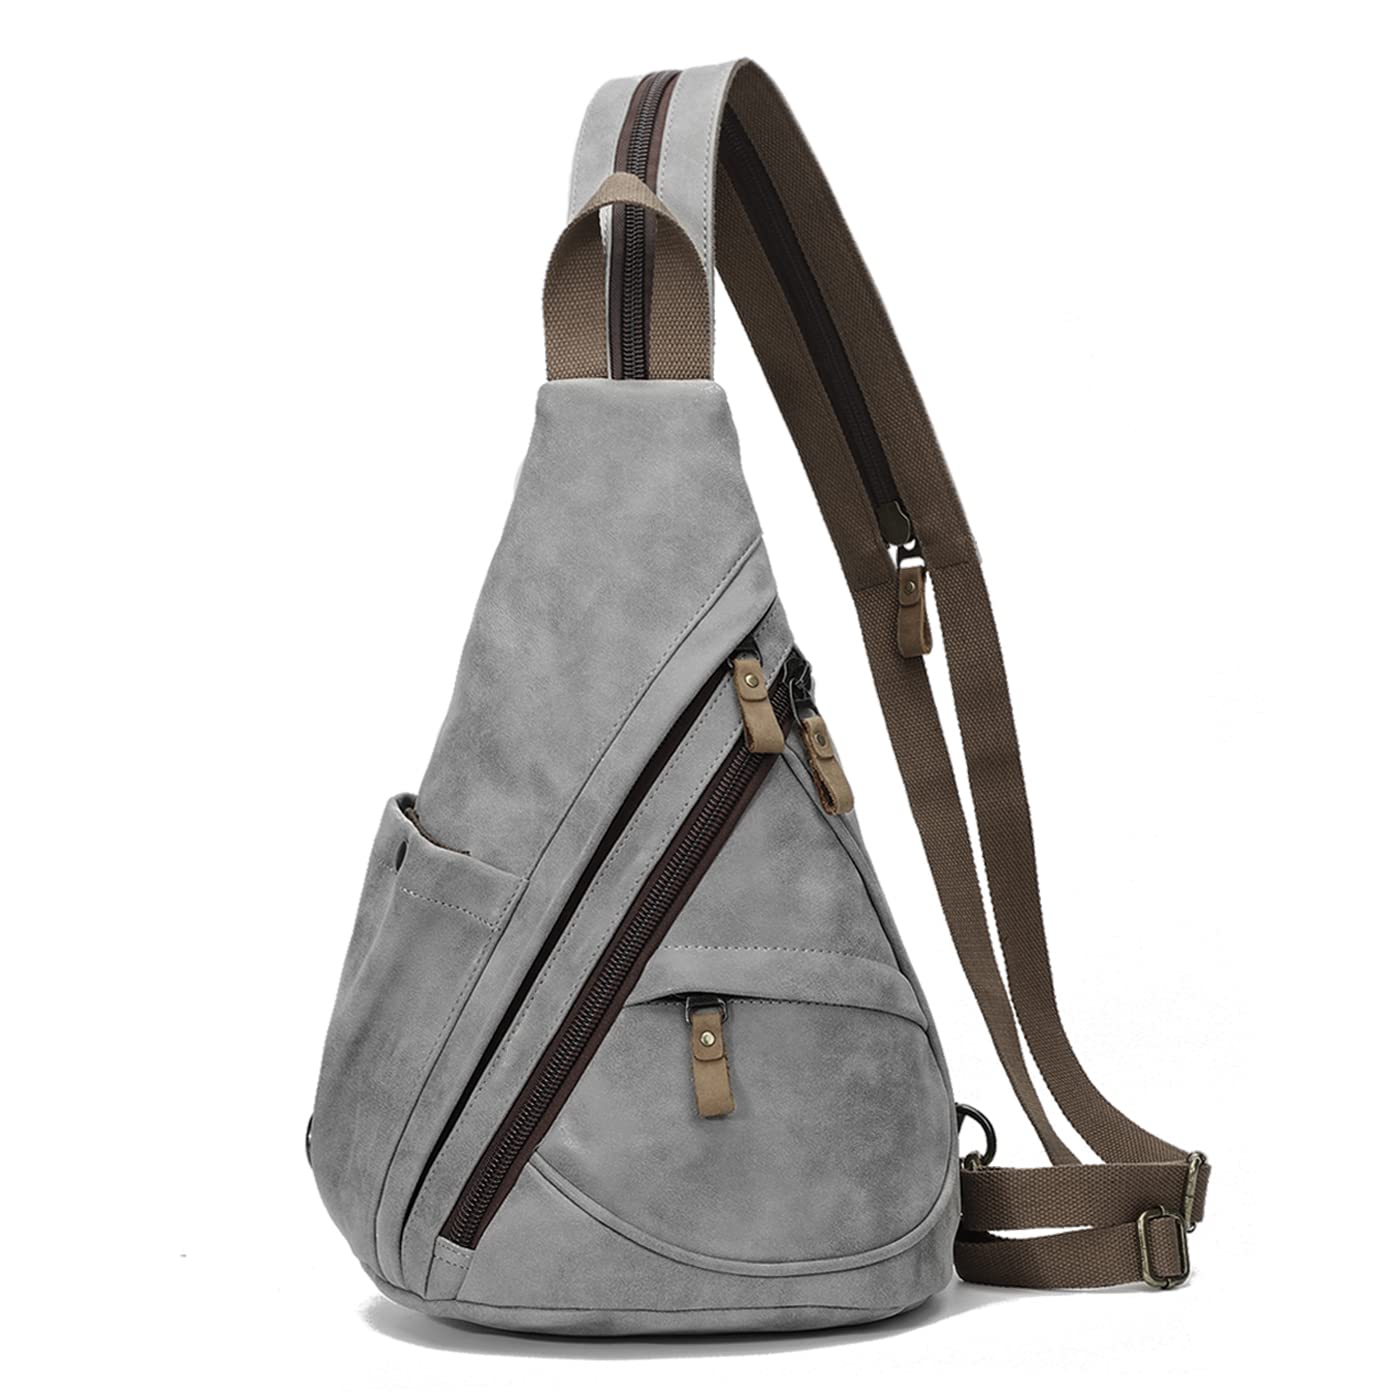 KL928 PU Leather Sling Bag - Small Crossbody Backpack Shoulder Casual Daypack Rucksack for Men Women